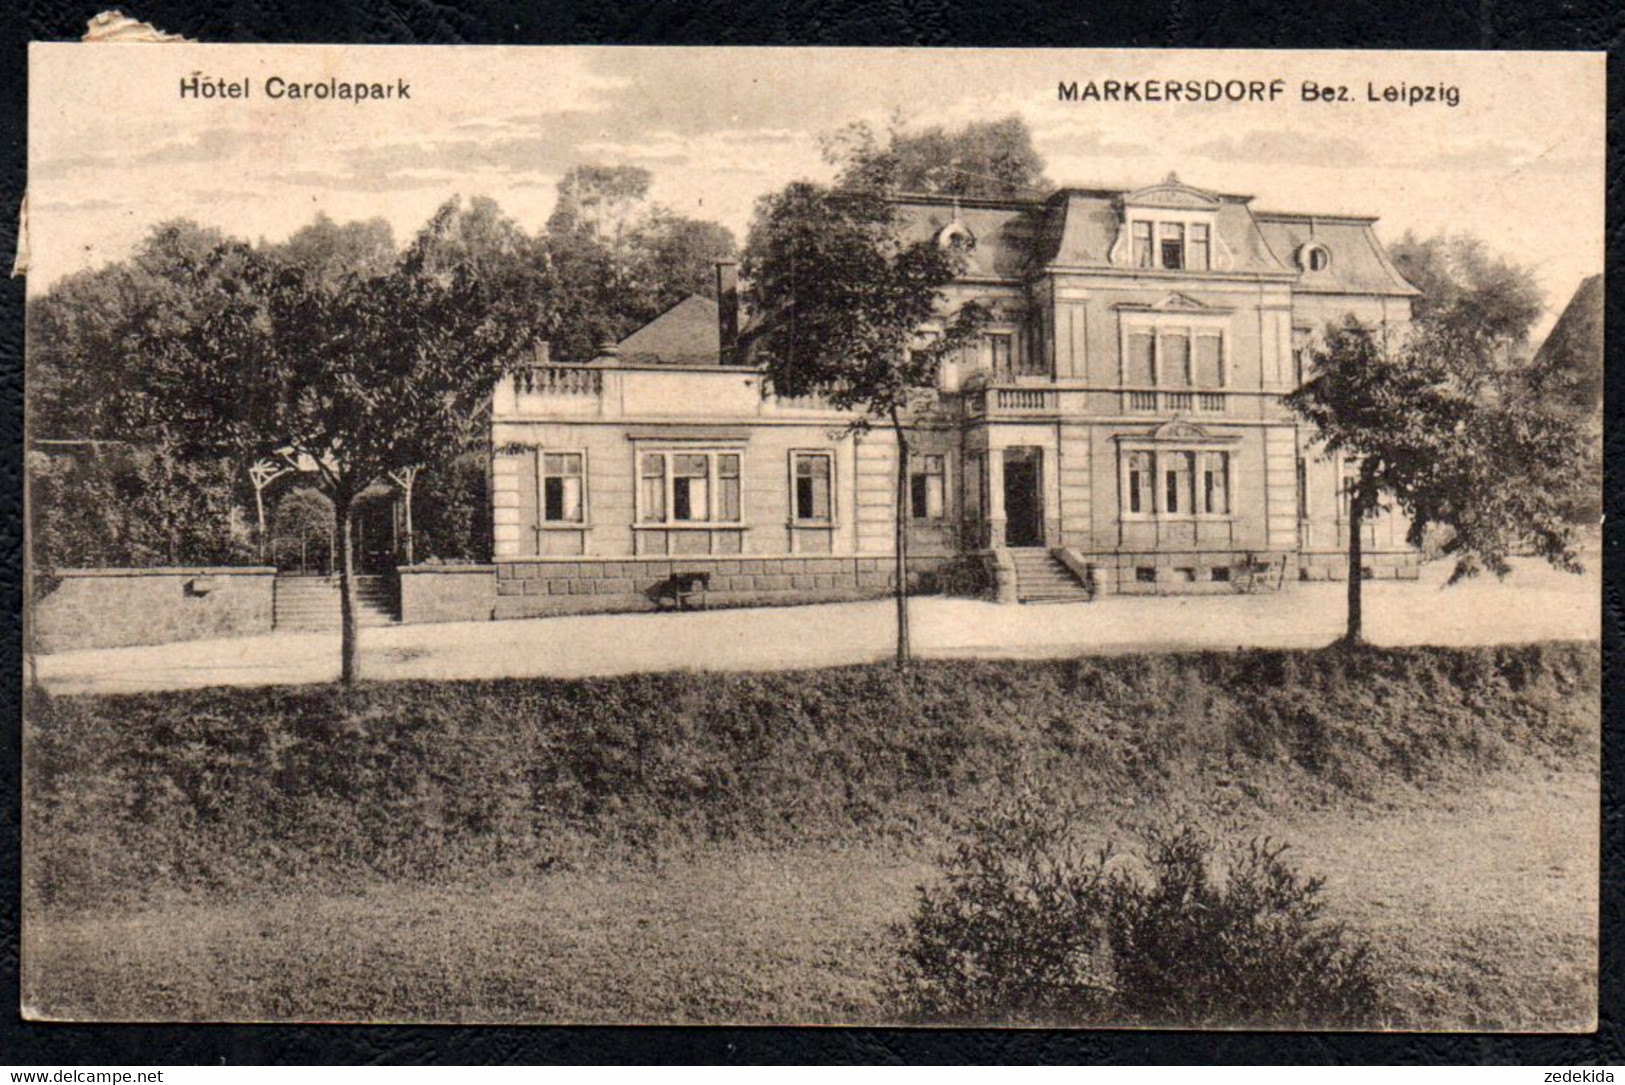 A4283 - Markersdorf Bz. Leipzig - Hotel Carolapark - Penig